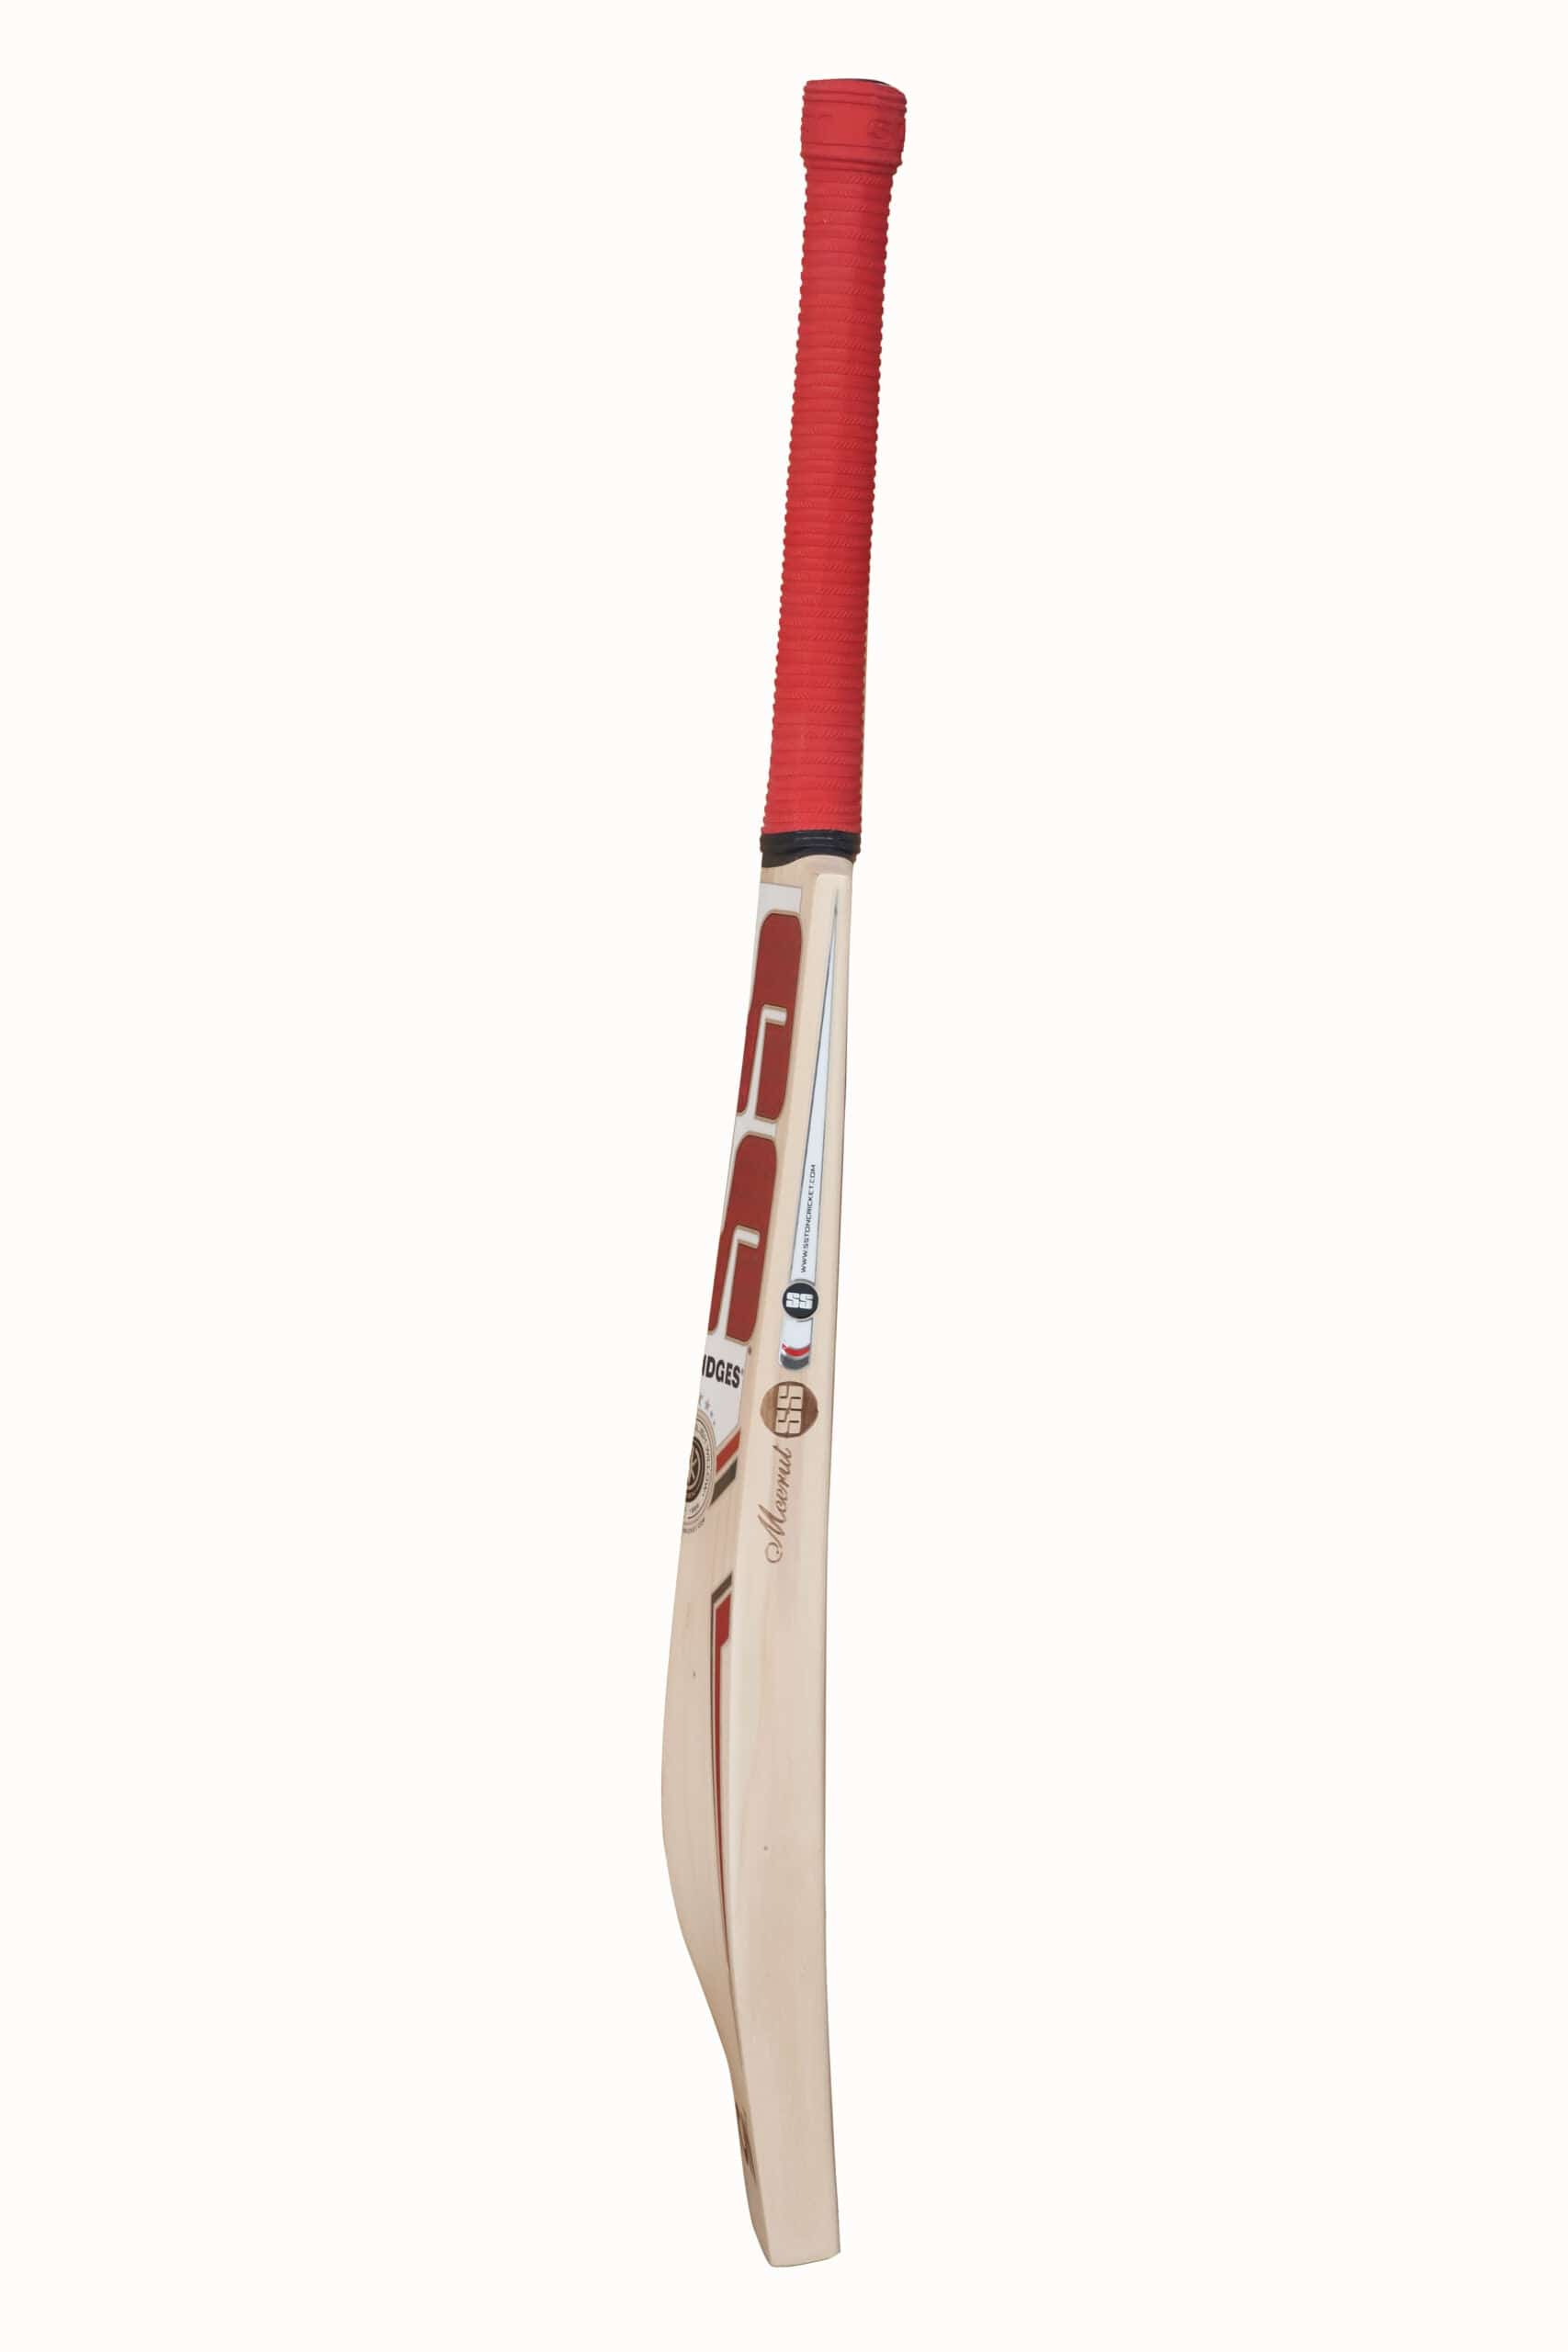 SS Cricket Bats Short Handle / Medium 2lbs 8oz - 2lbs 10oz SS MaxiMus English Willow Adult Cricket Bat